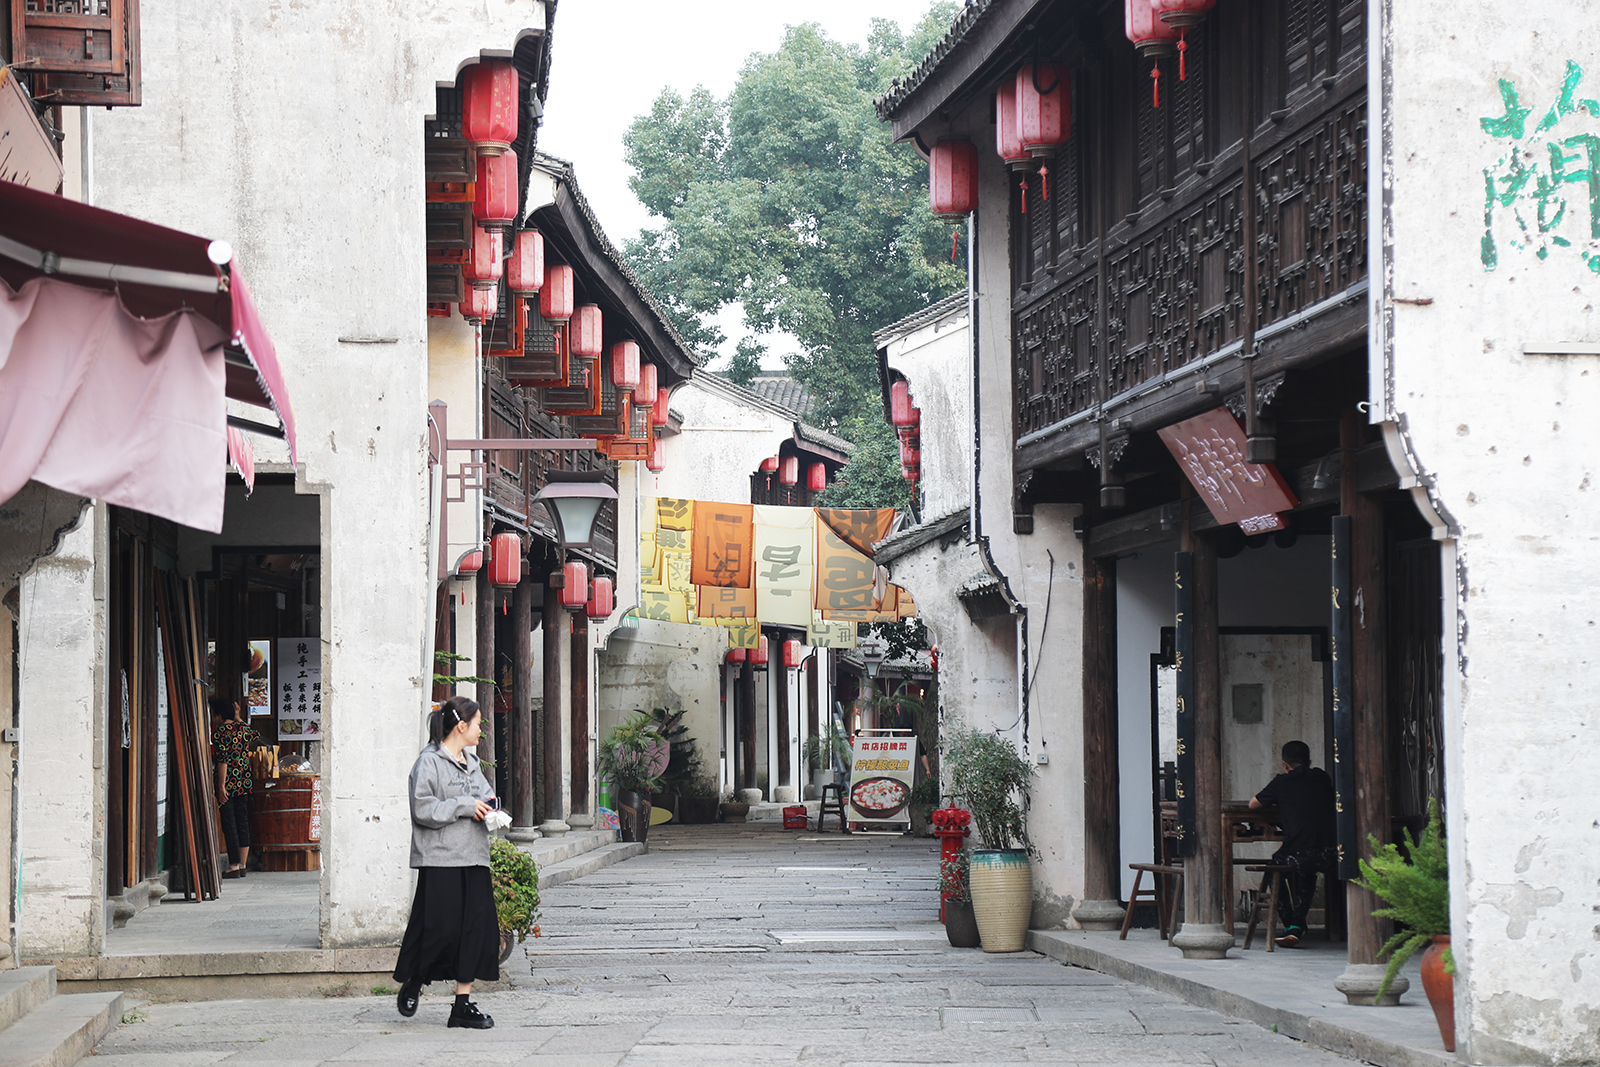 The main street of Luzhen was built according to the descriptions found in Lu Xun's novels in Shaoxing, Zhejiang Province. /CGTN